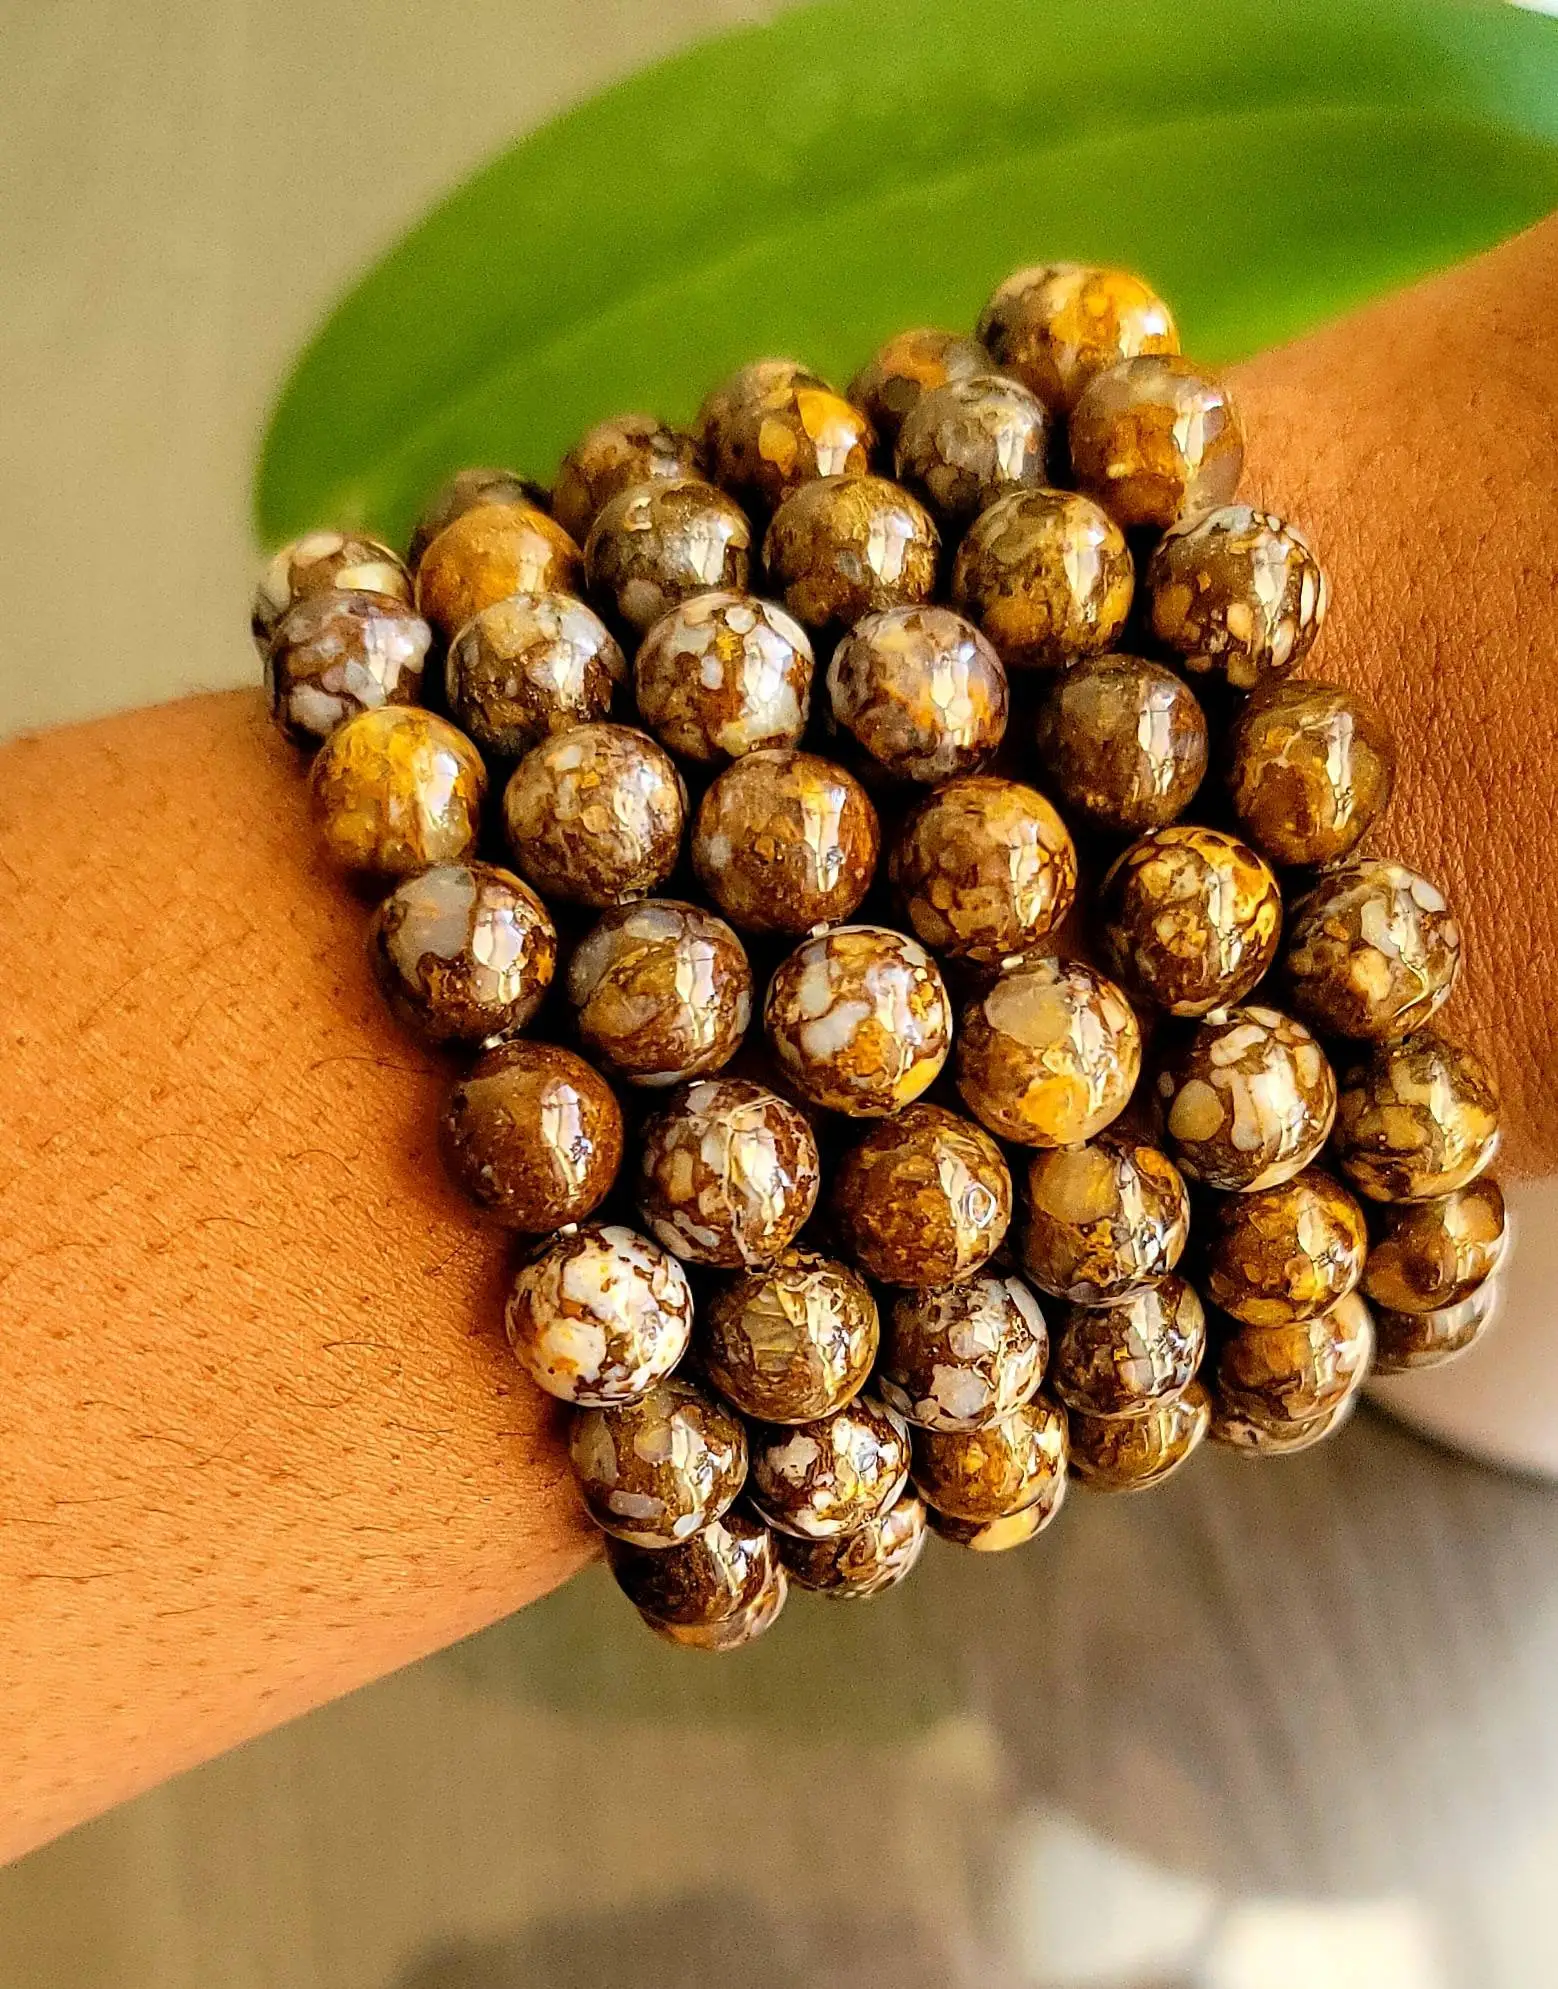 Luxury Feng Shui Precious Stone Bracelet Crystals Healing Real Natural Amethyst Stones Beaded Bracelet for men women bracelet